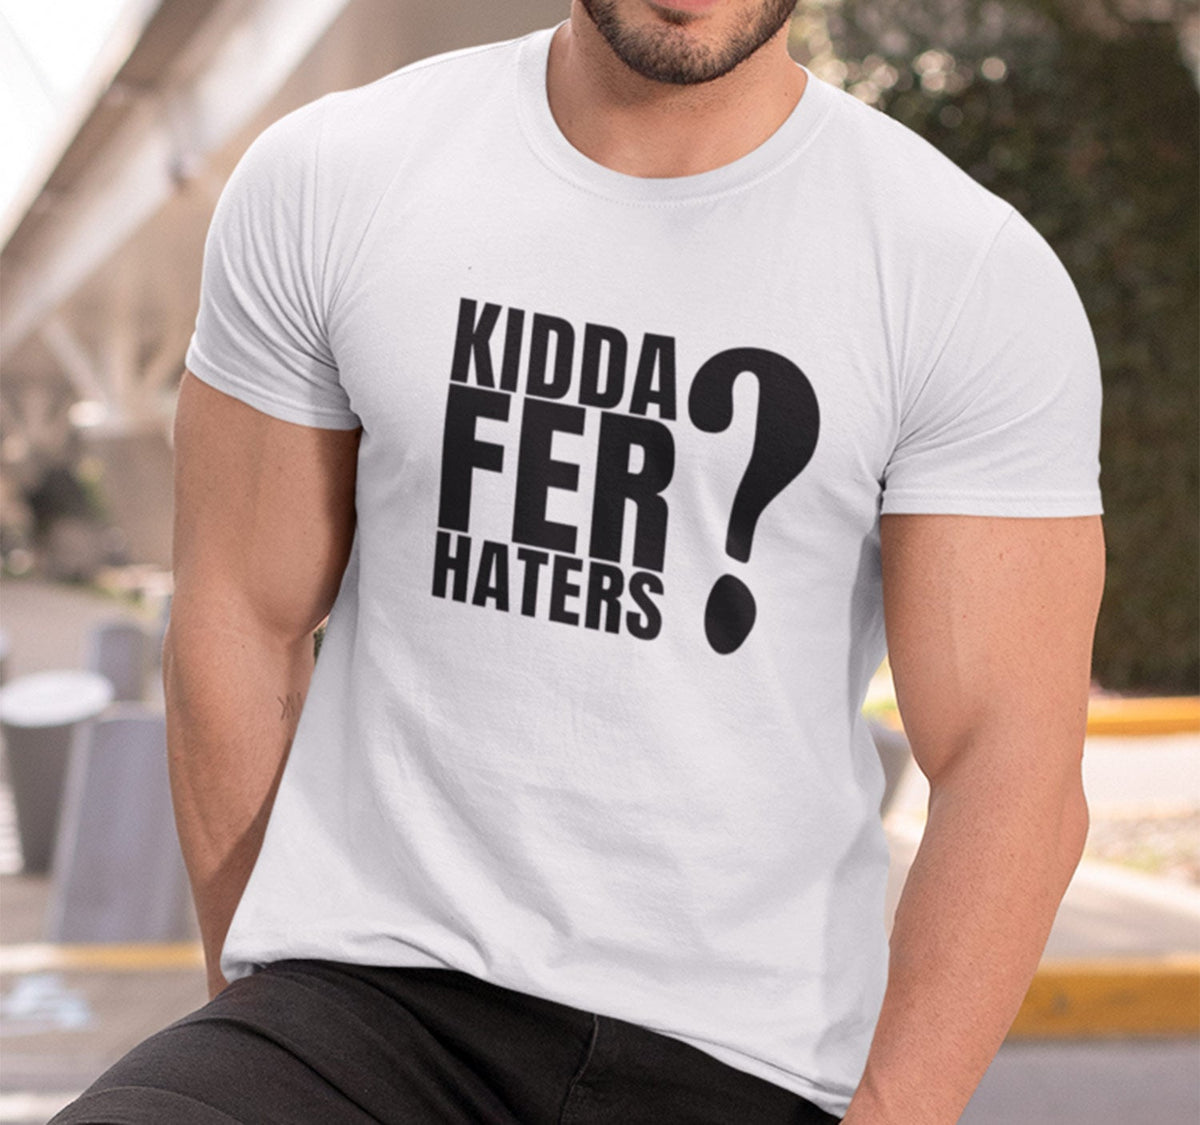 Kidda Fer Haters - Men Punjabi T Shirts